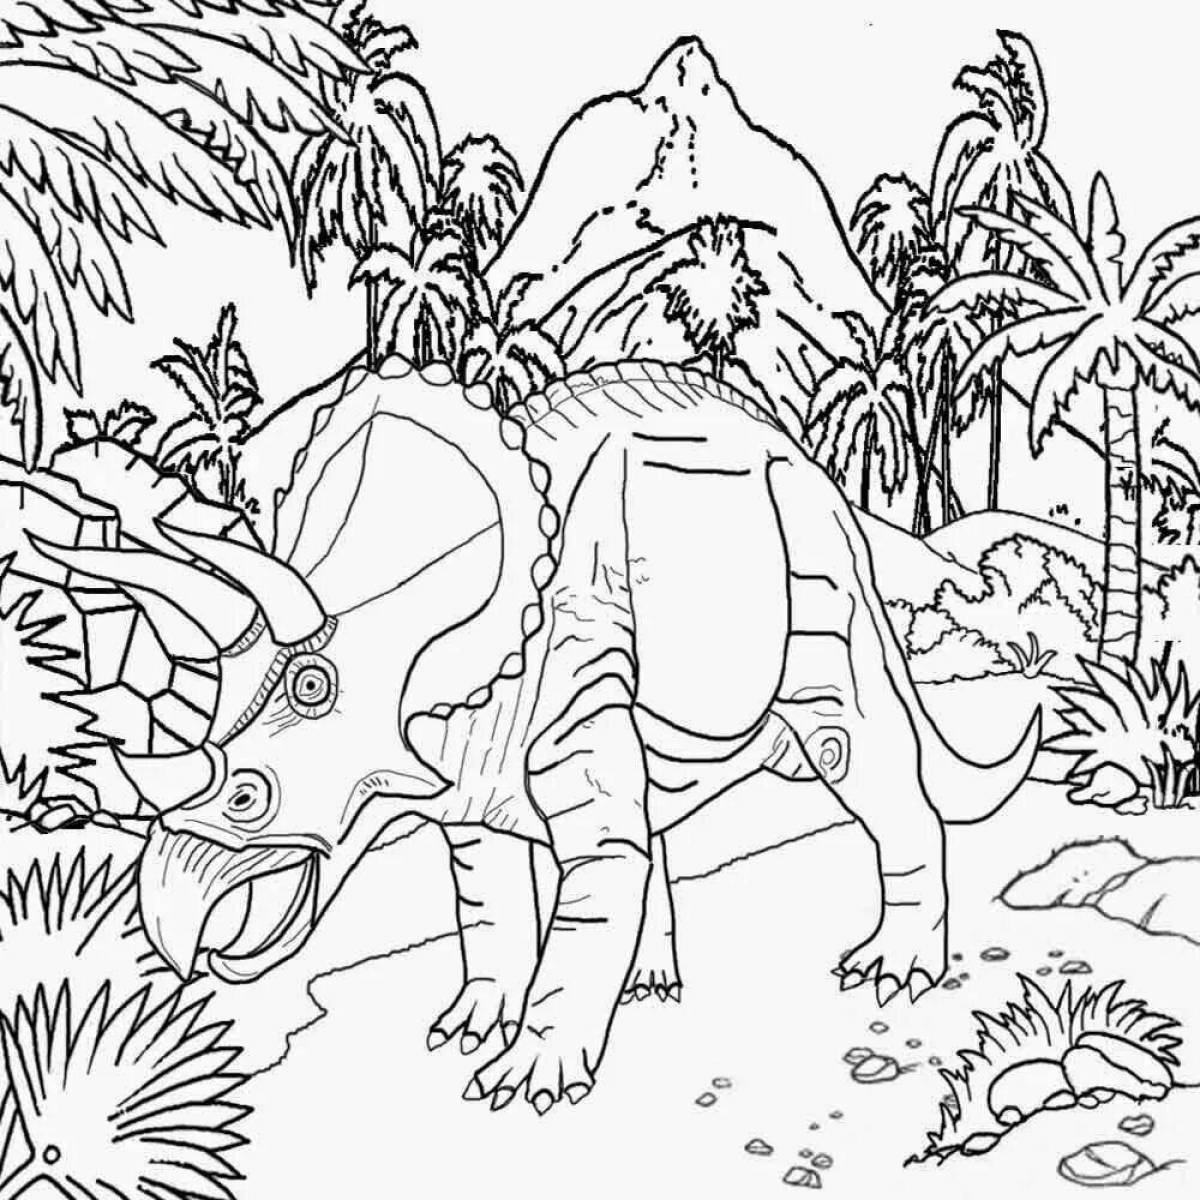 Impressive jurassic park dinosaurs coloring book